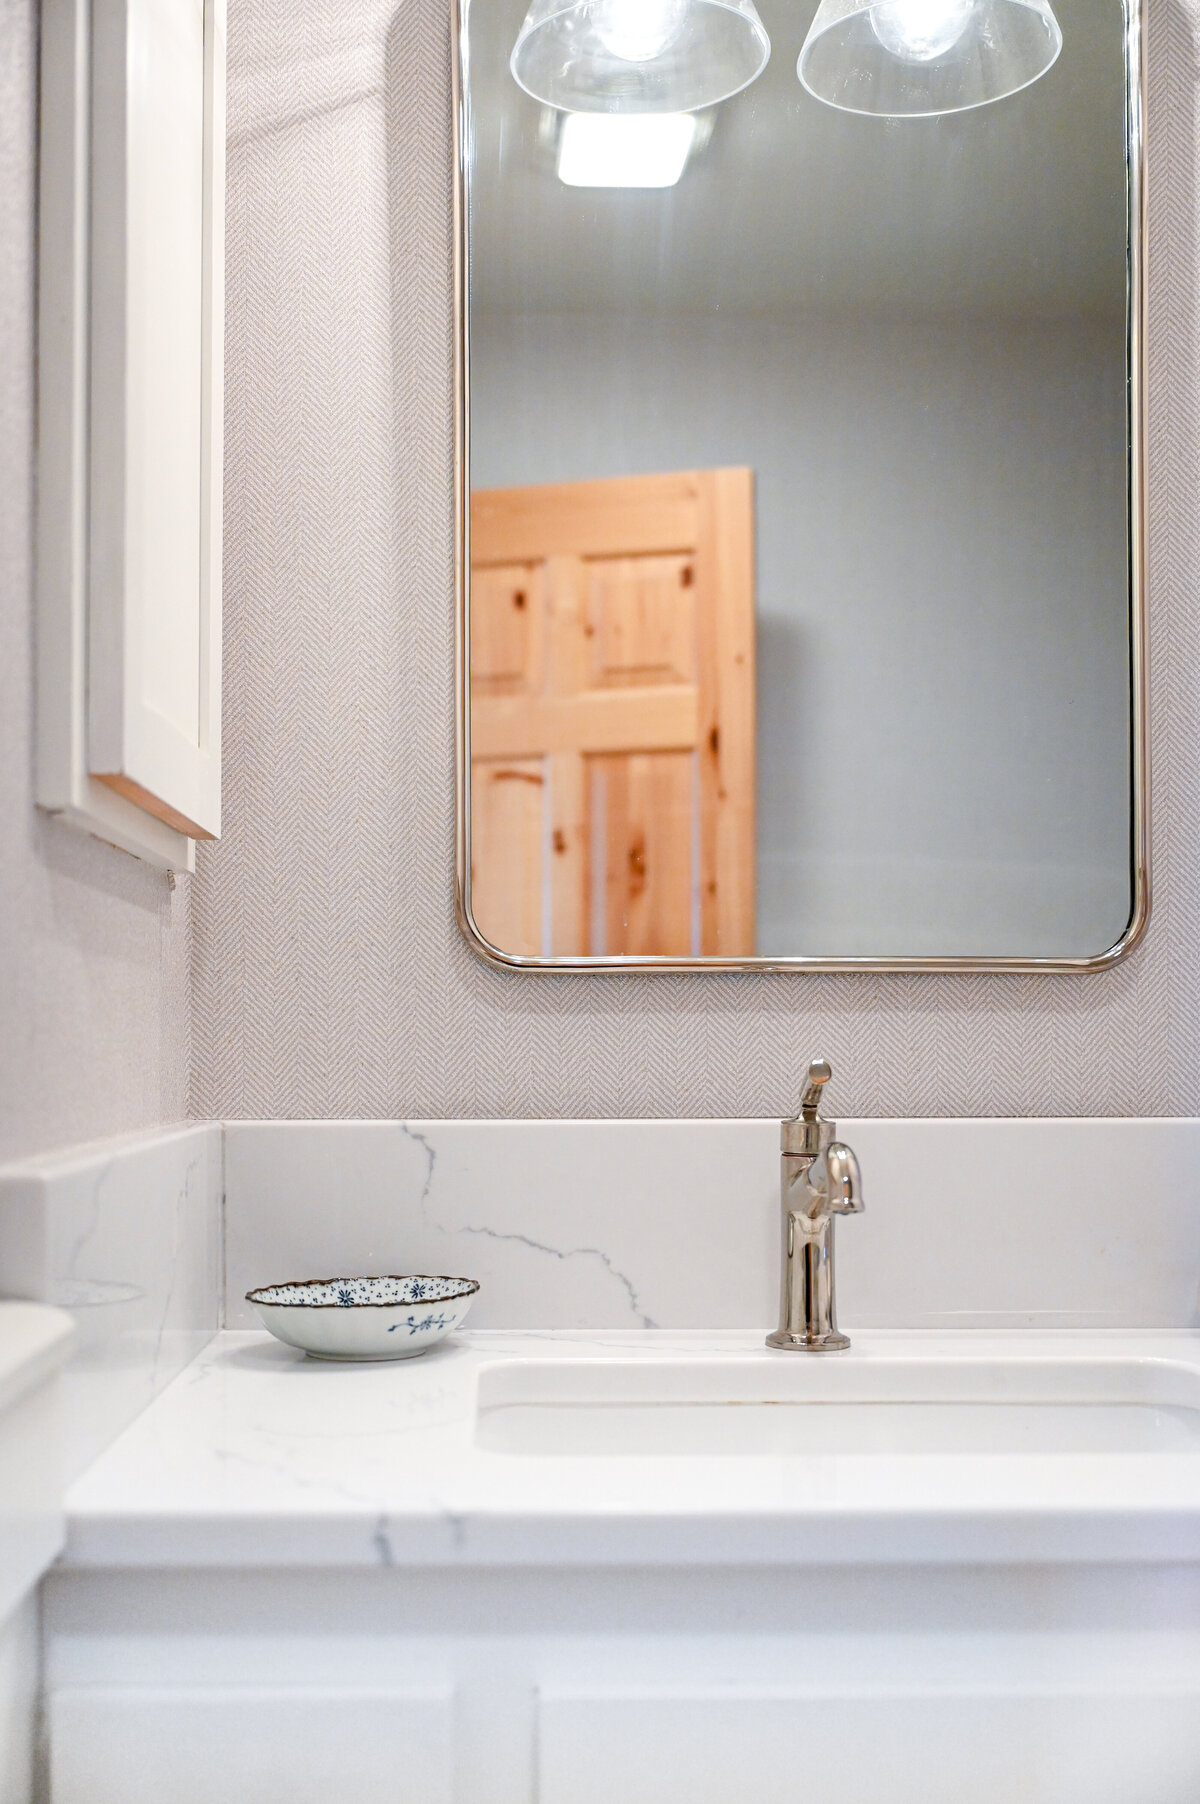 Schweitzer Cabin - Clean bathroom vanity for a ski retreat.